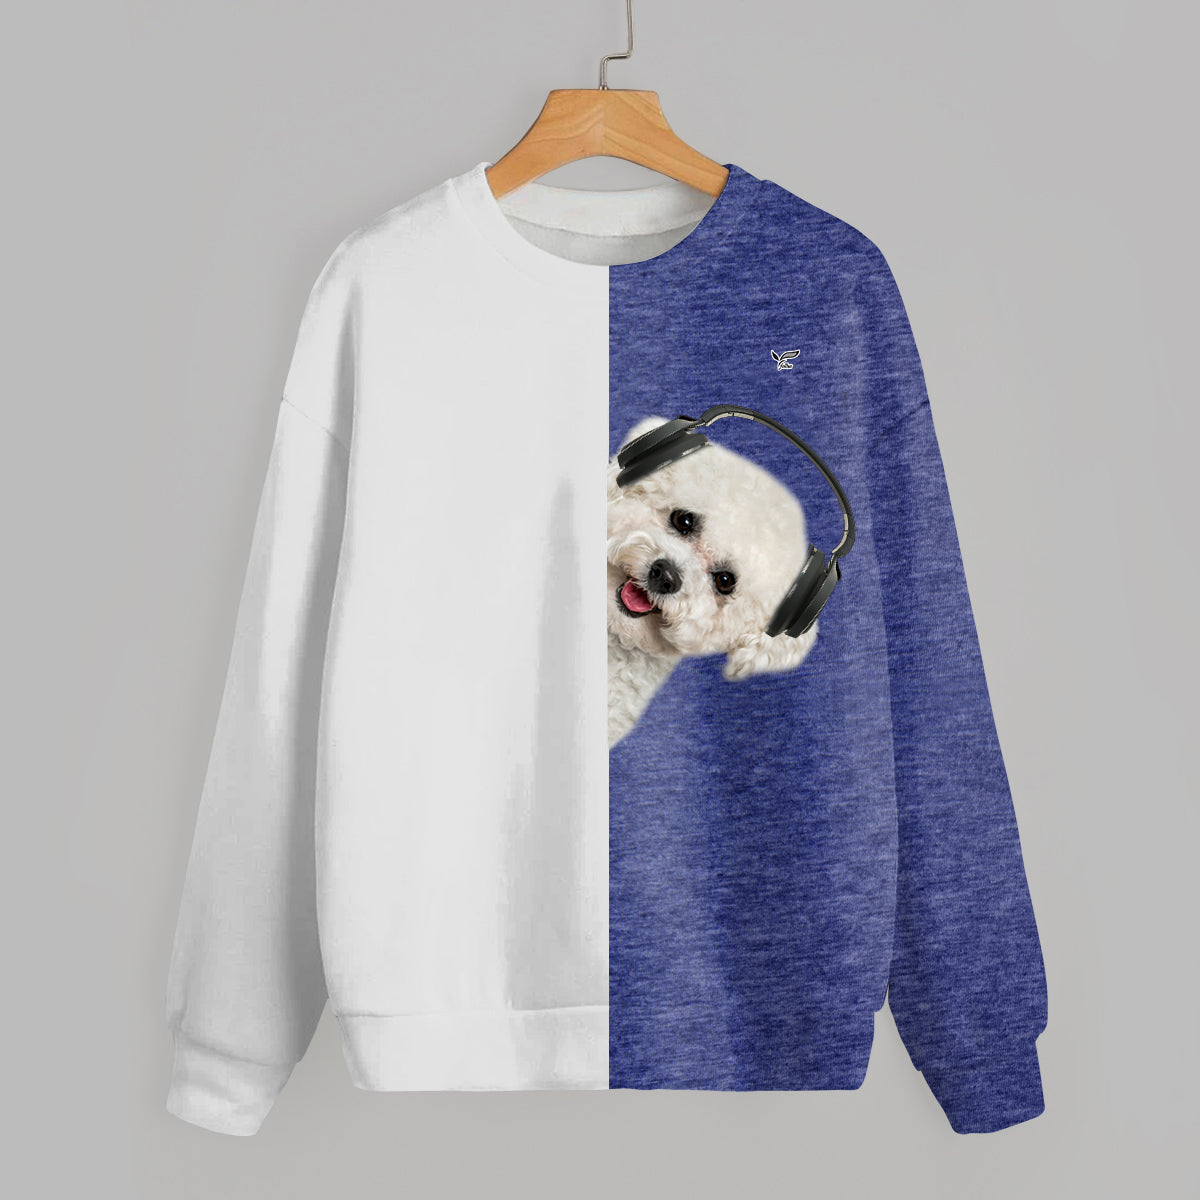 Funny Happy Time - Bichon Frise Sweatshirt V2